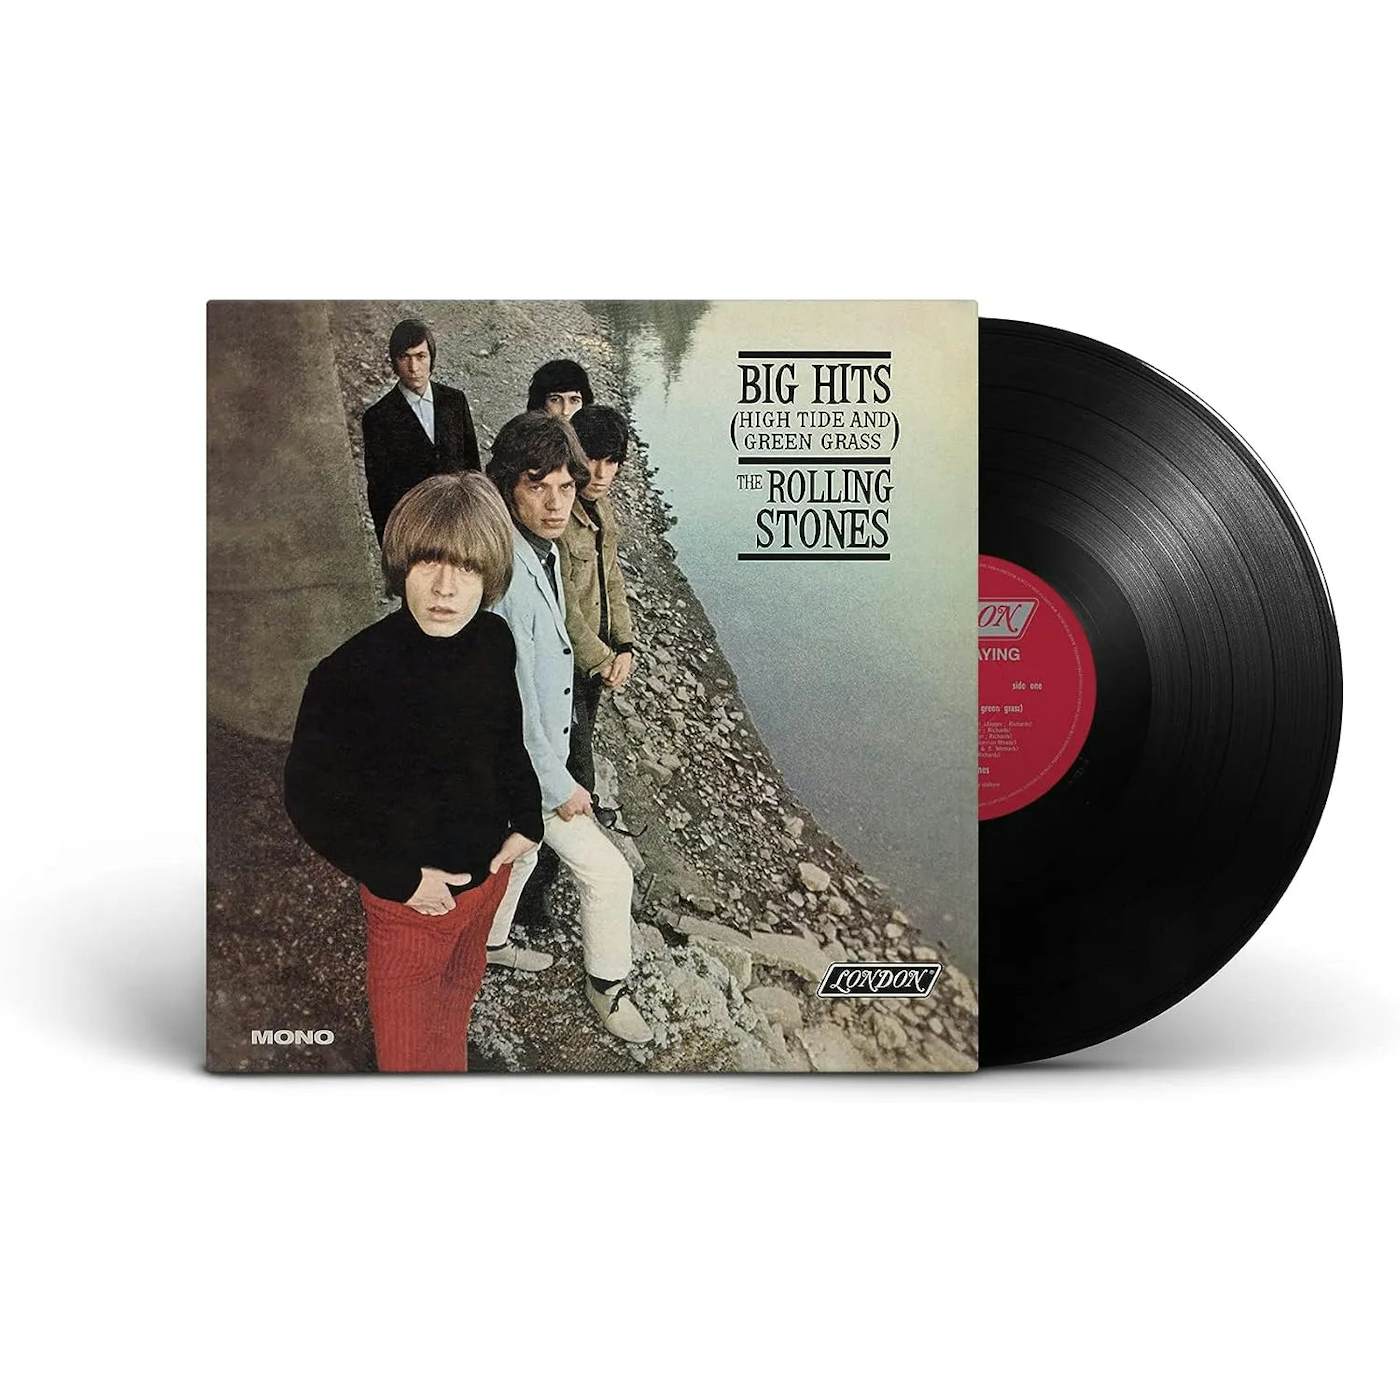 The Rolling Stones- Big Hits (High Tide & Green Grass) US (Vinyl)